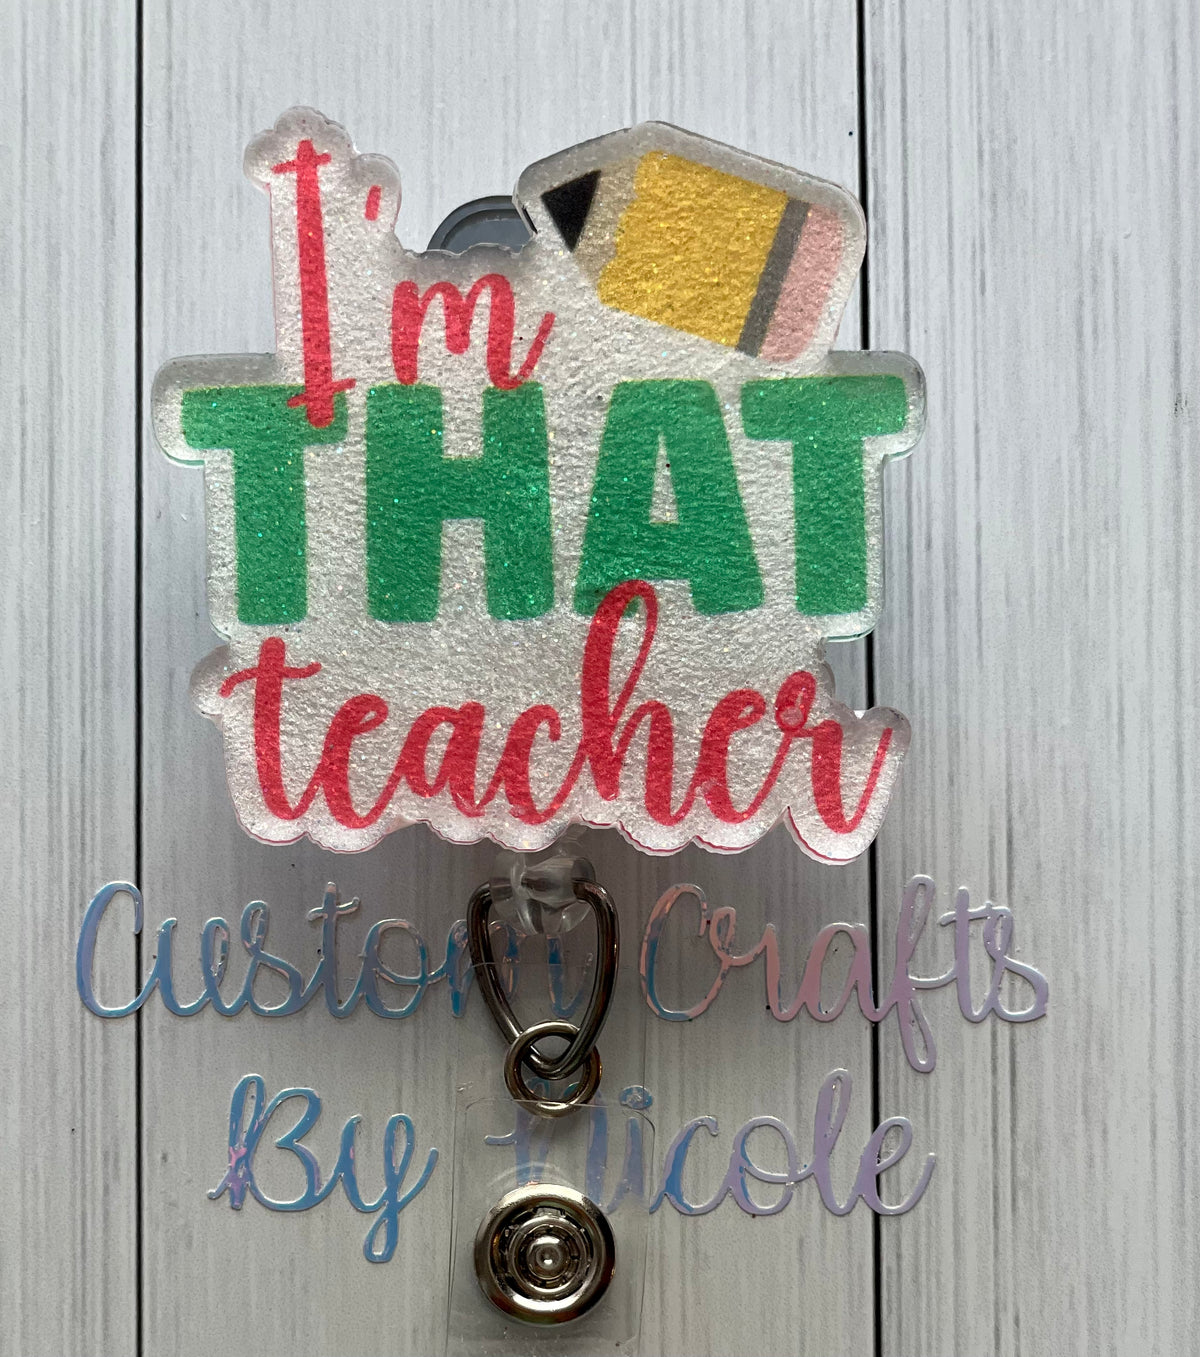 I’m that teacher